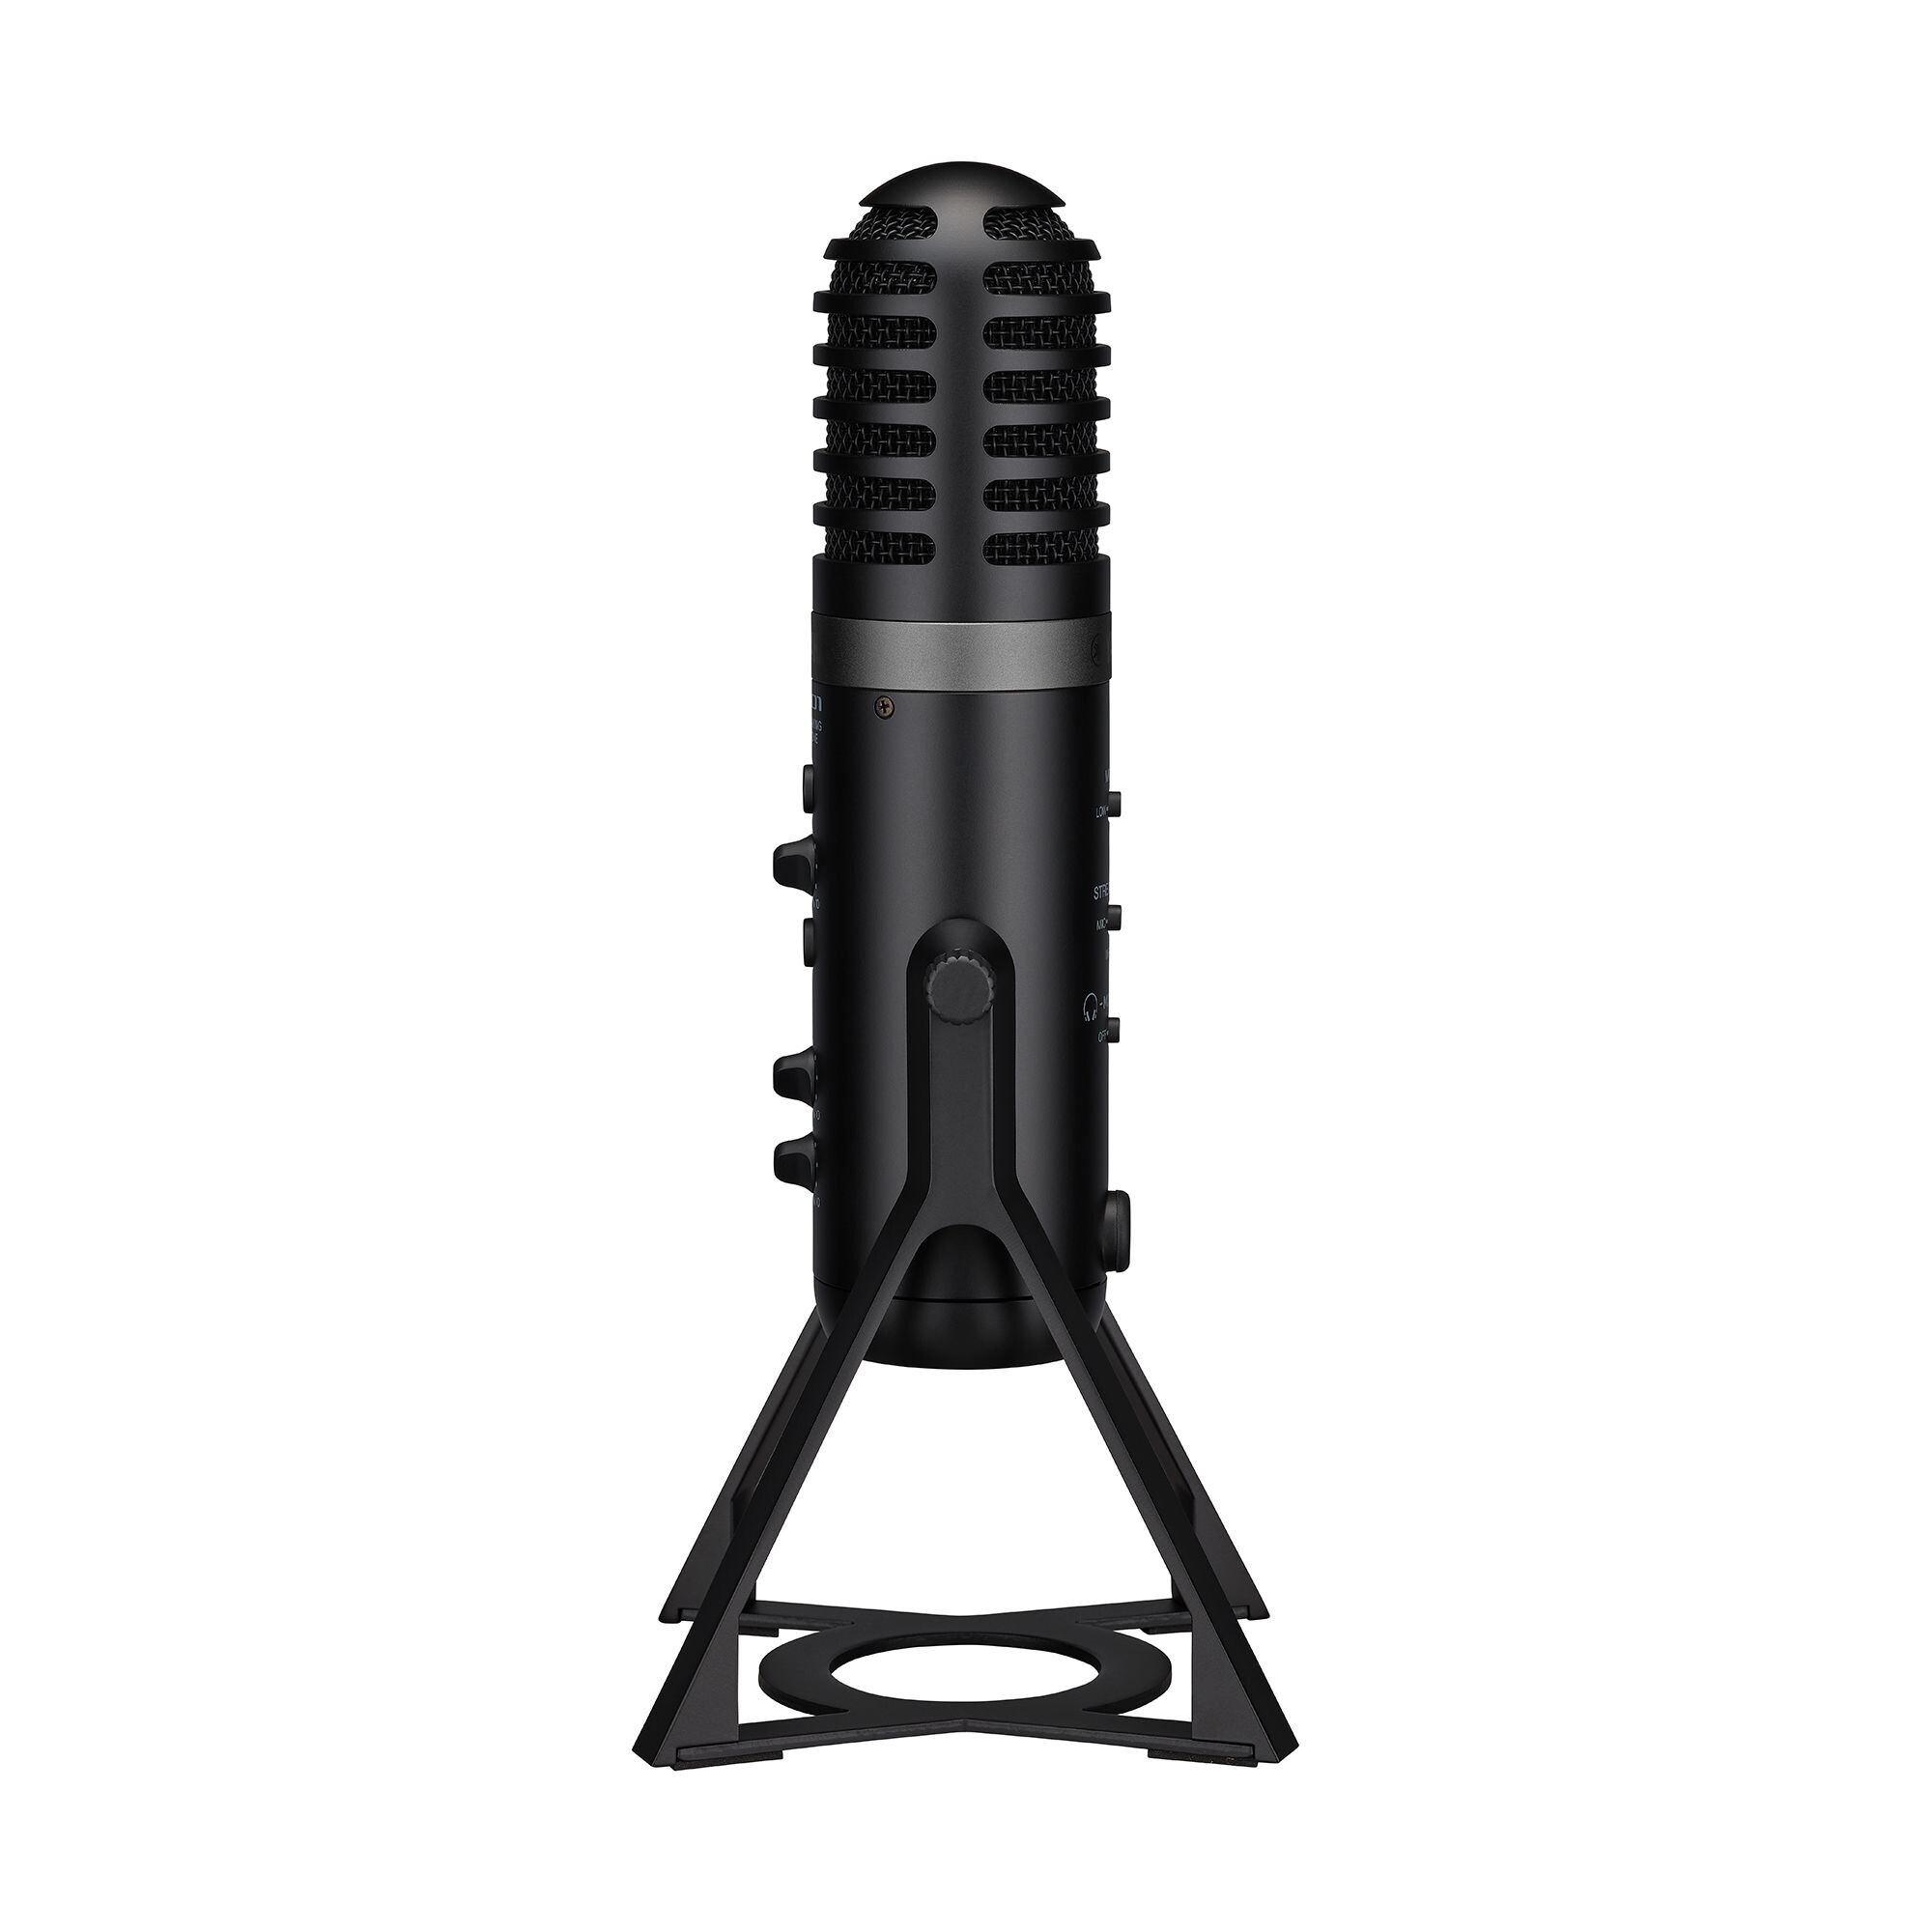 Yamaha-AG01-Live-Streaming-USB-Mikrofon-schwarz